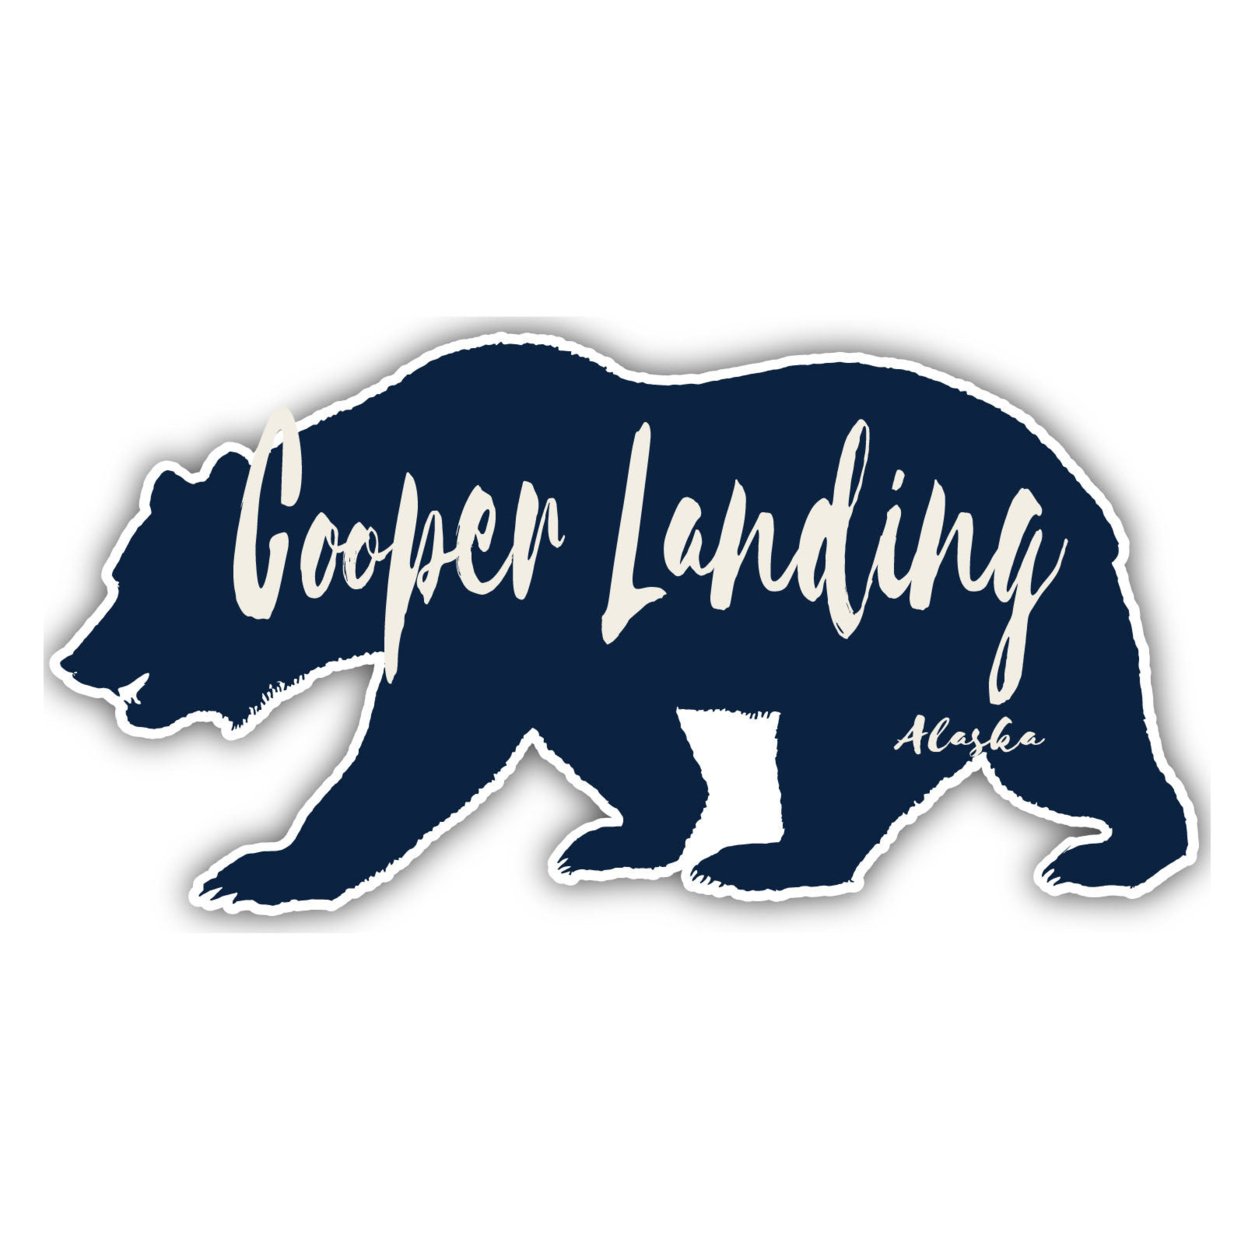 Cooper Landing Alaska Souvenir Decorative Stickers (Choose Theme And Size) - 4-Pack, 12-Inch, Bear